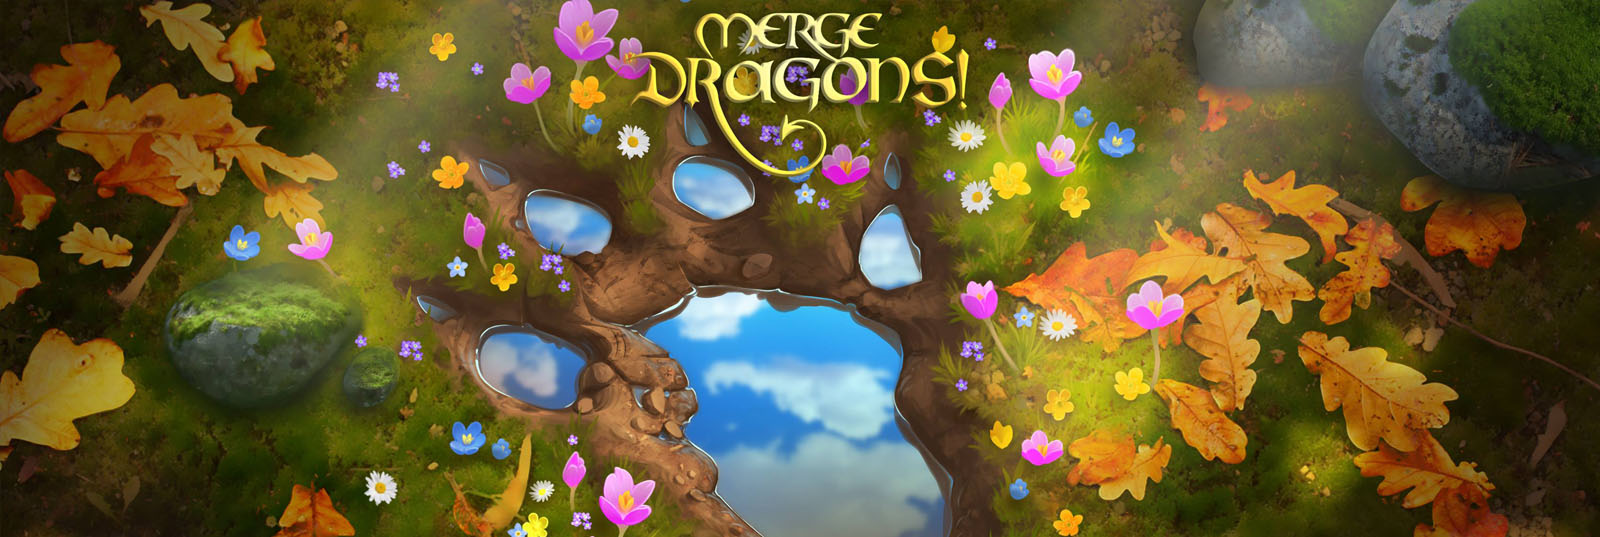 Merge Dragons Herausforderung 26 Guide : Maibaum 5 banner